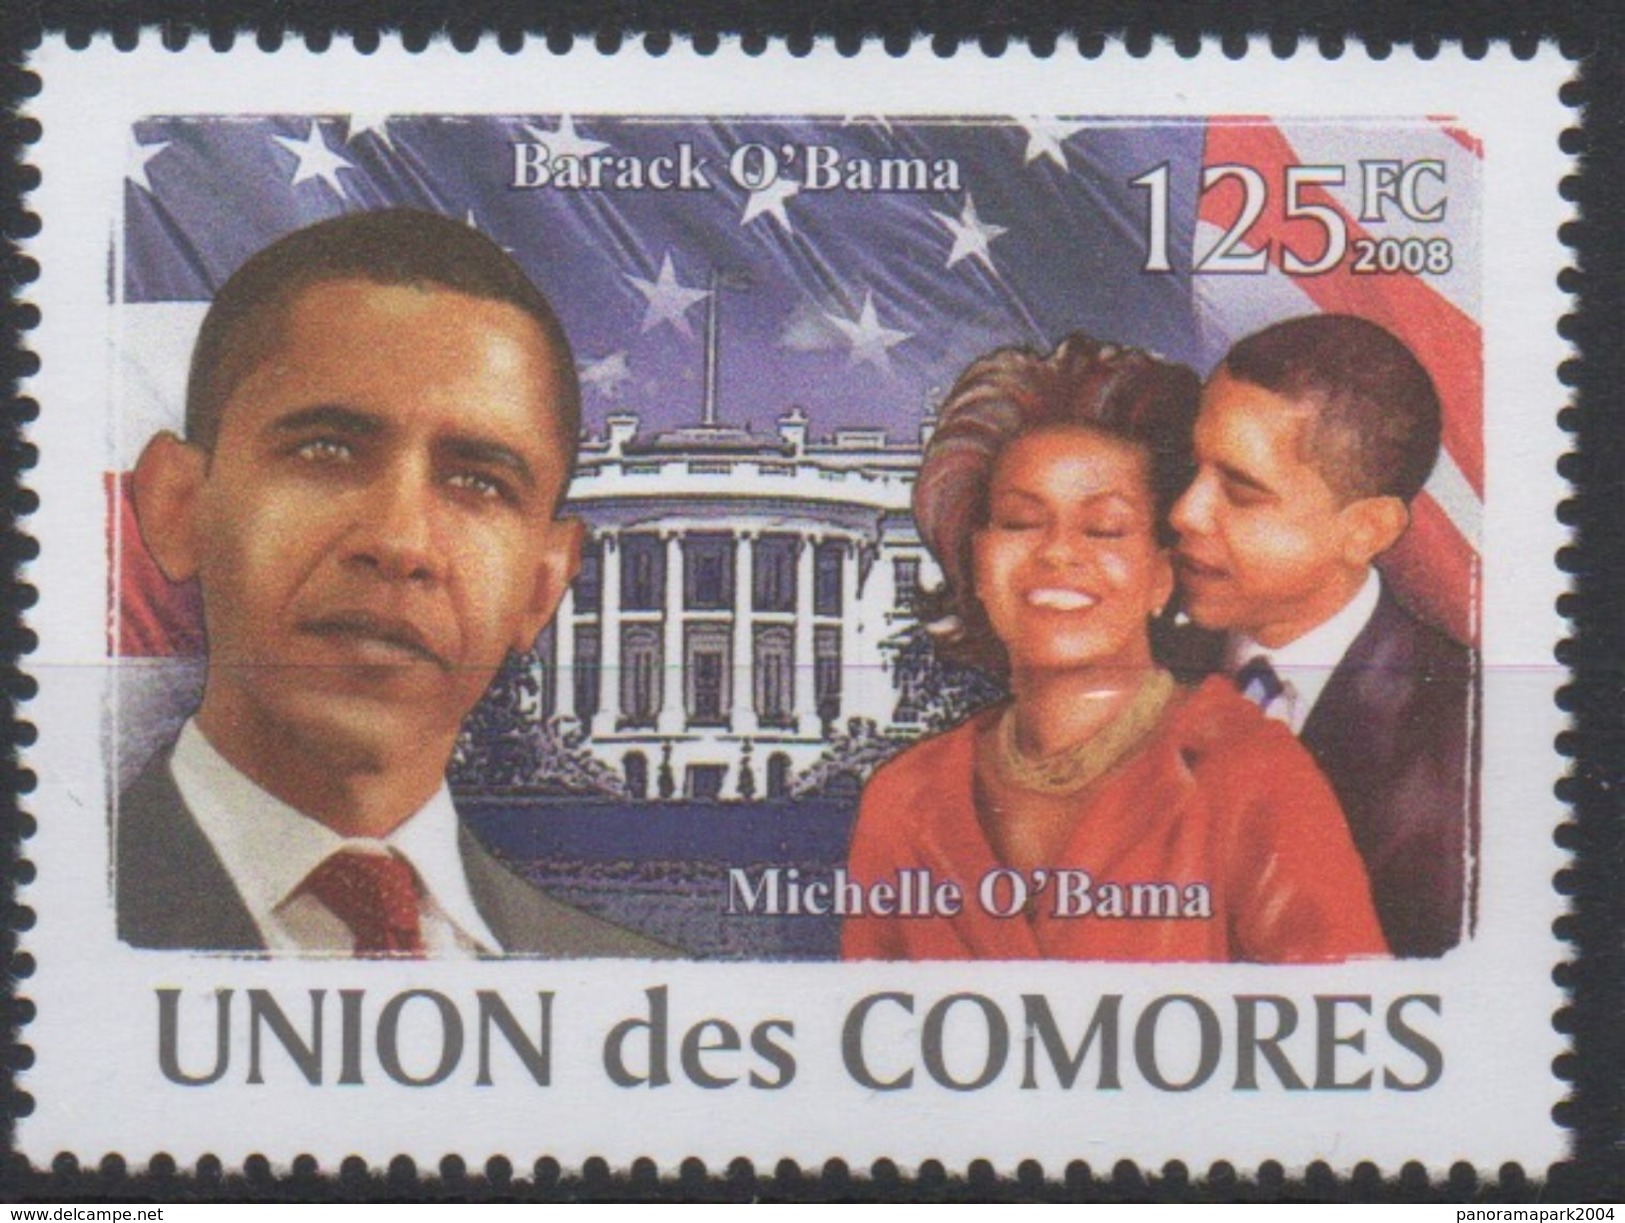 Comores Comoros Komoren 2008 USA President Barack Michelle Obama The White House US Flag Mi. I-VI Bl. I Unissued - Stamps